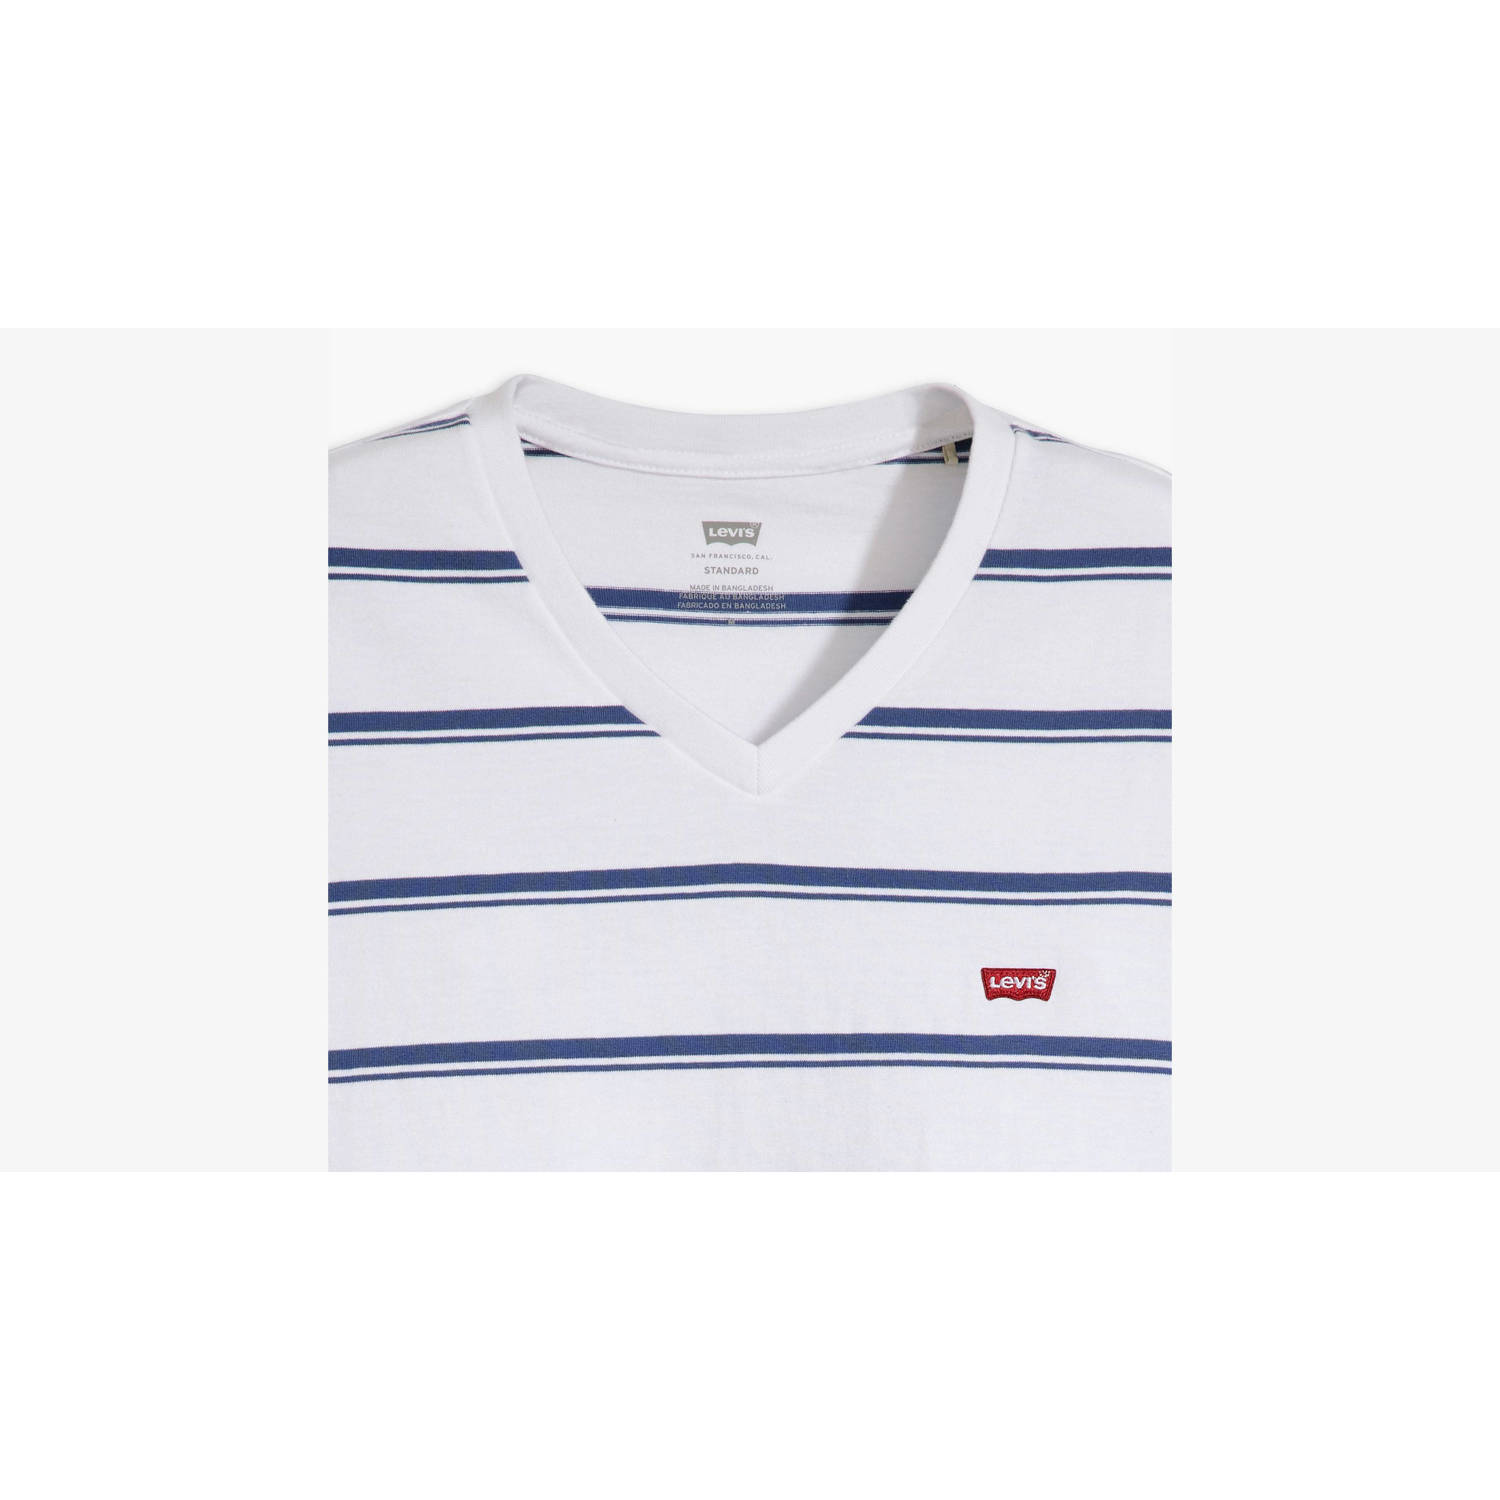 Levi's gestreept T-shirt sail stripe brigh